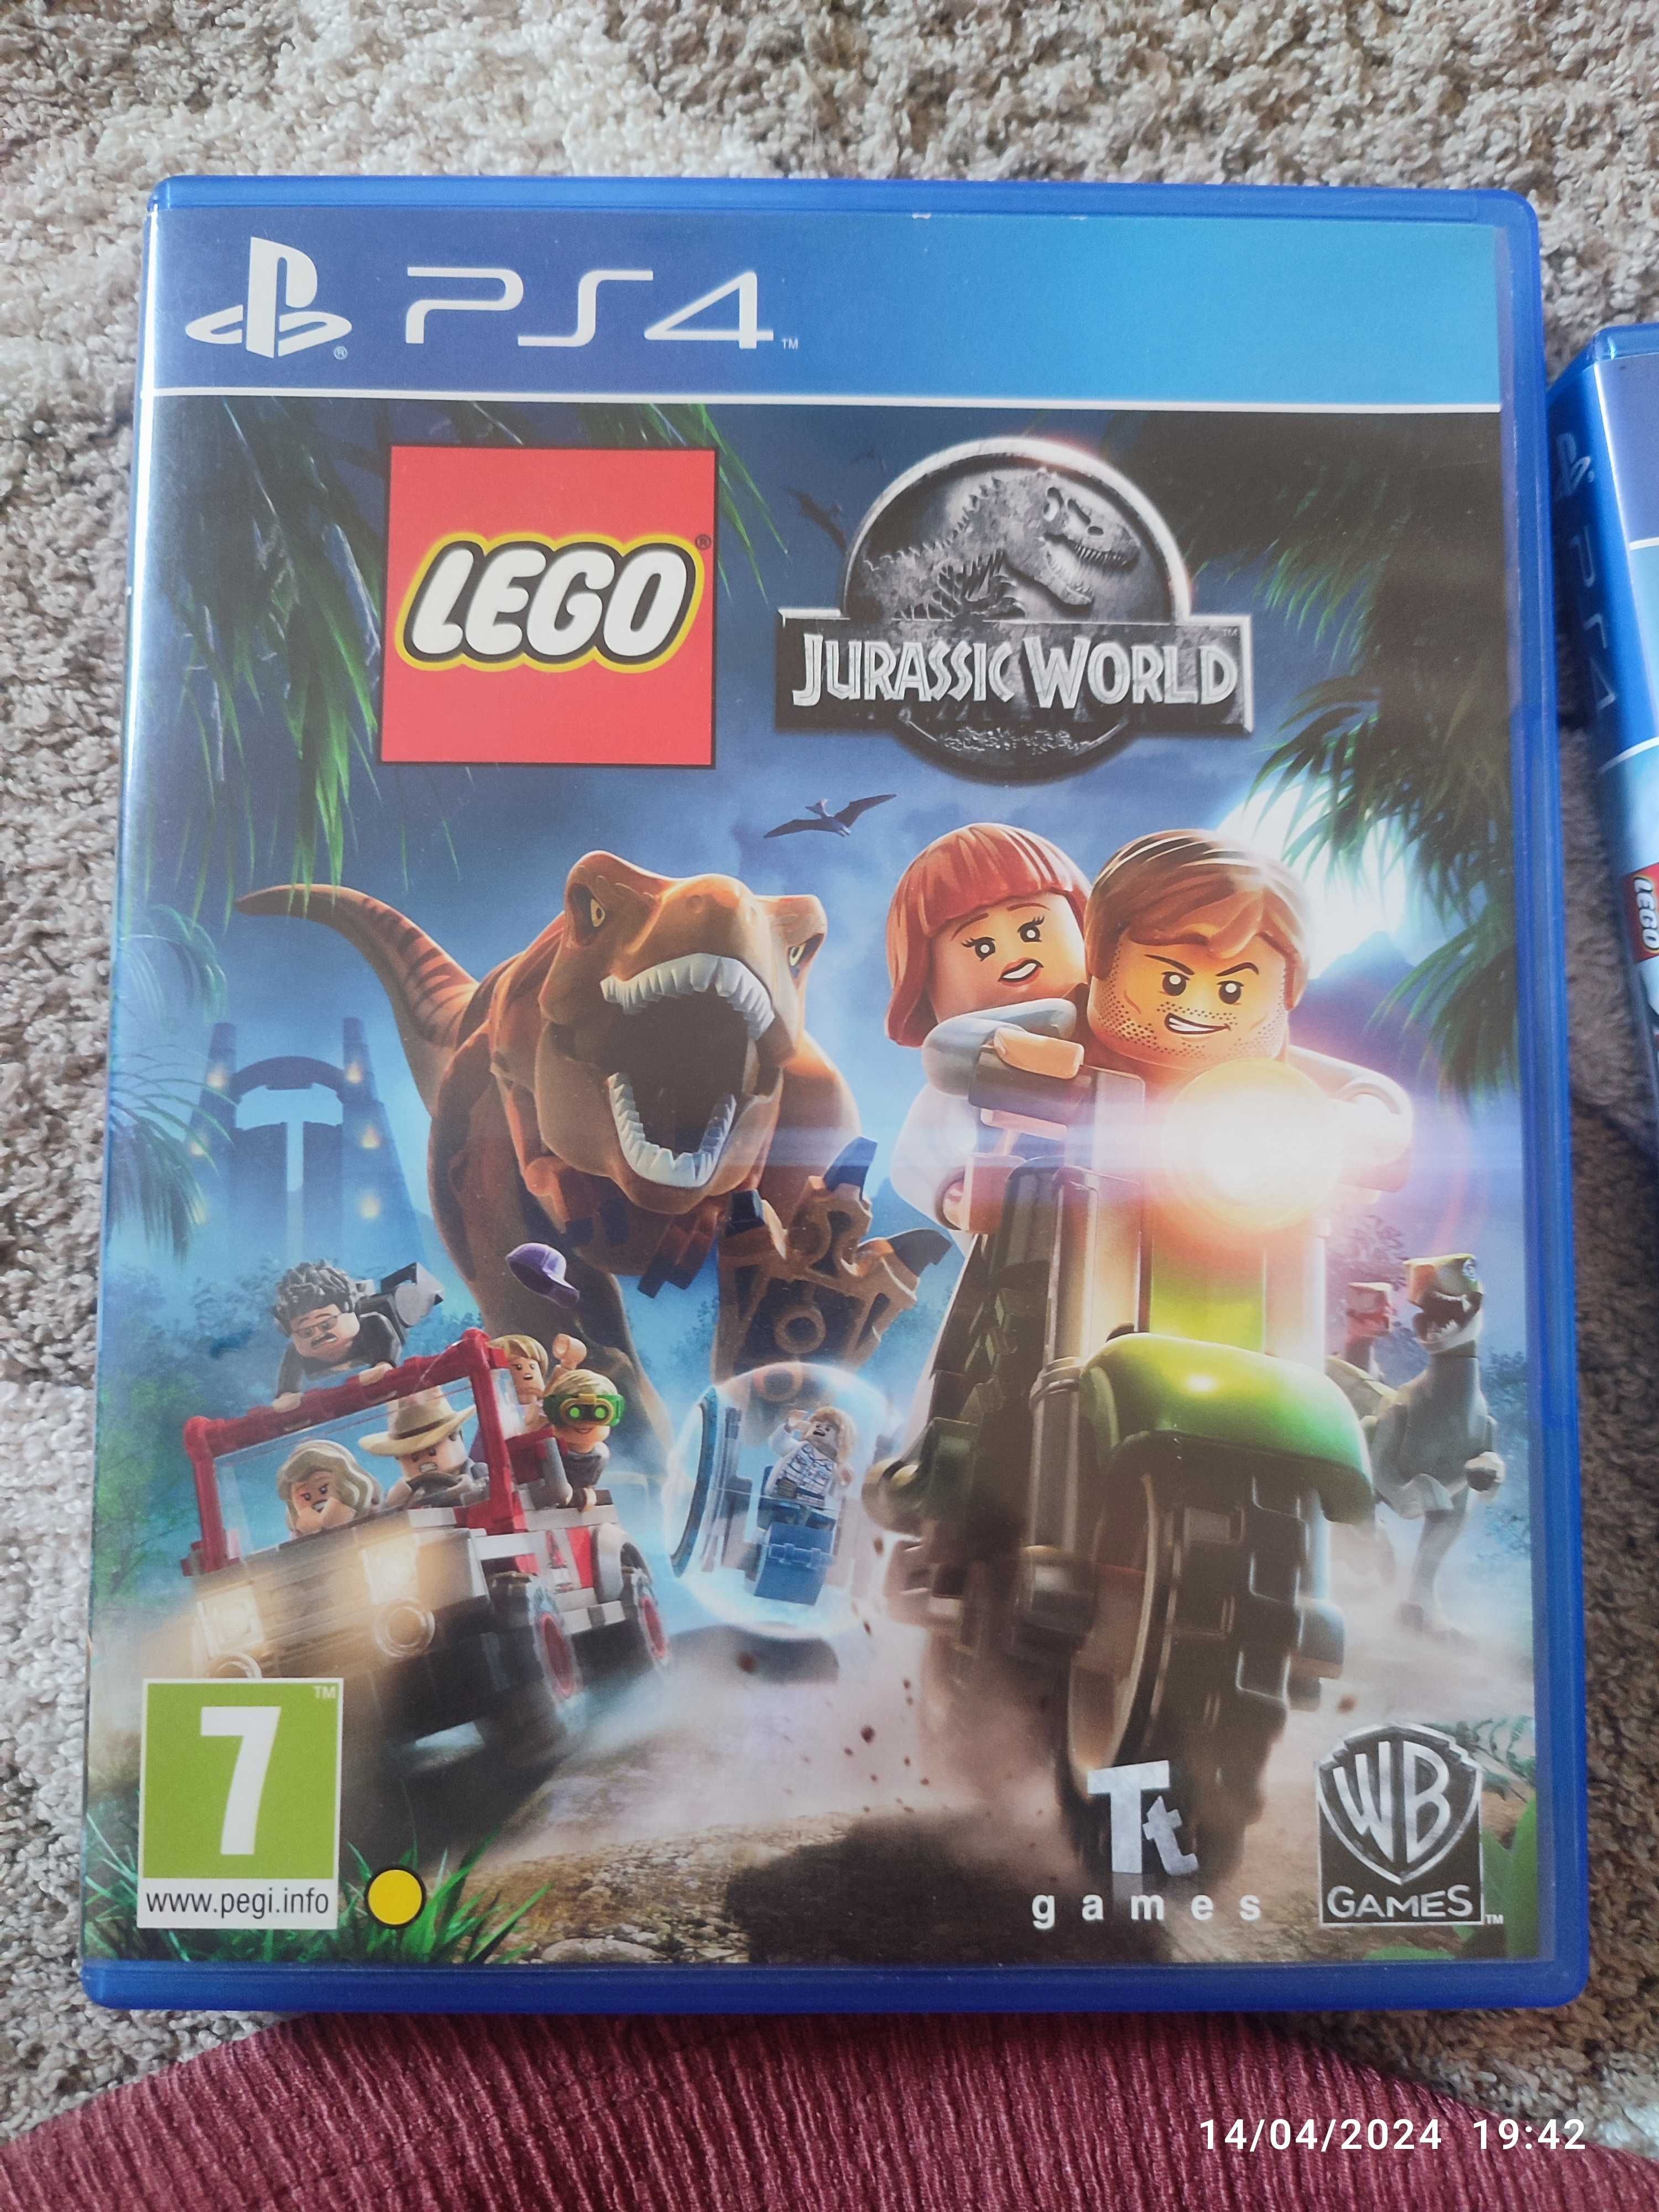 Jogos Lego PlayStation 4